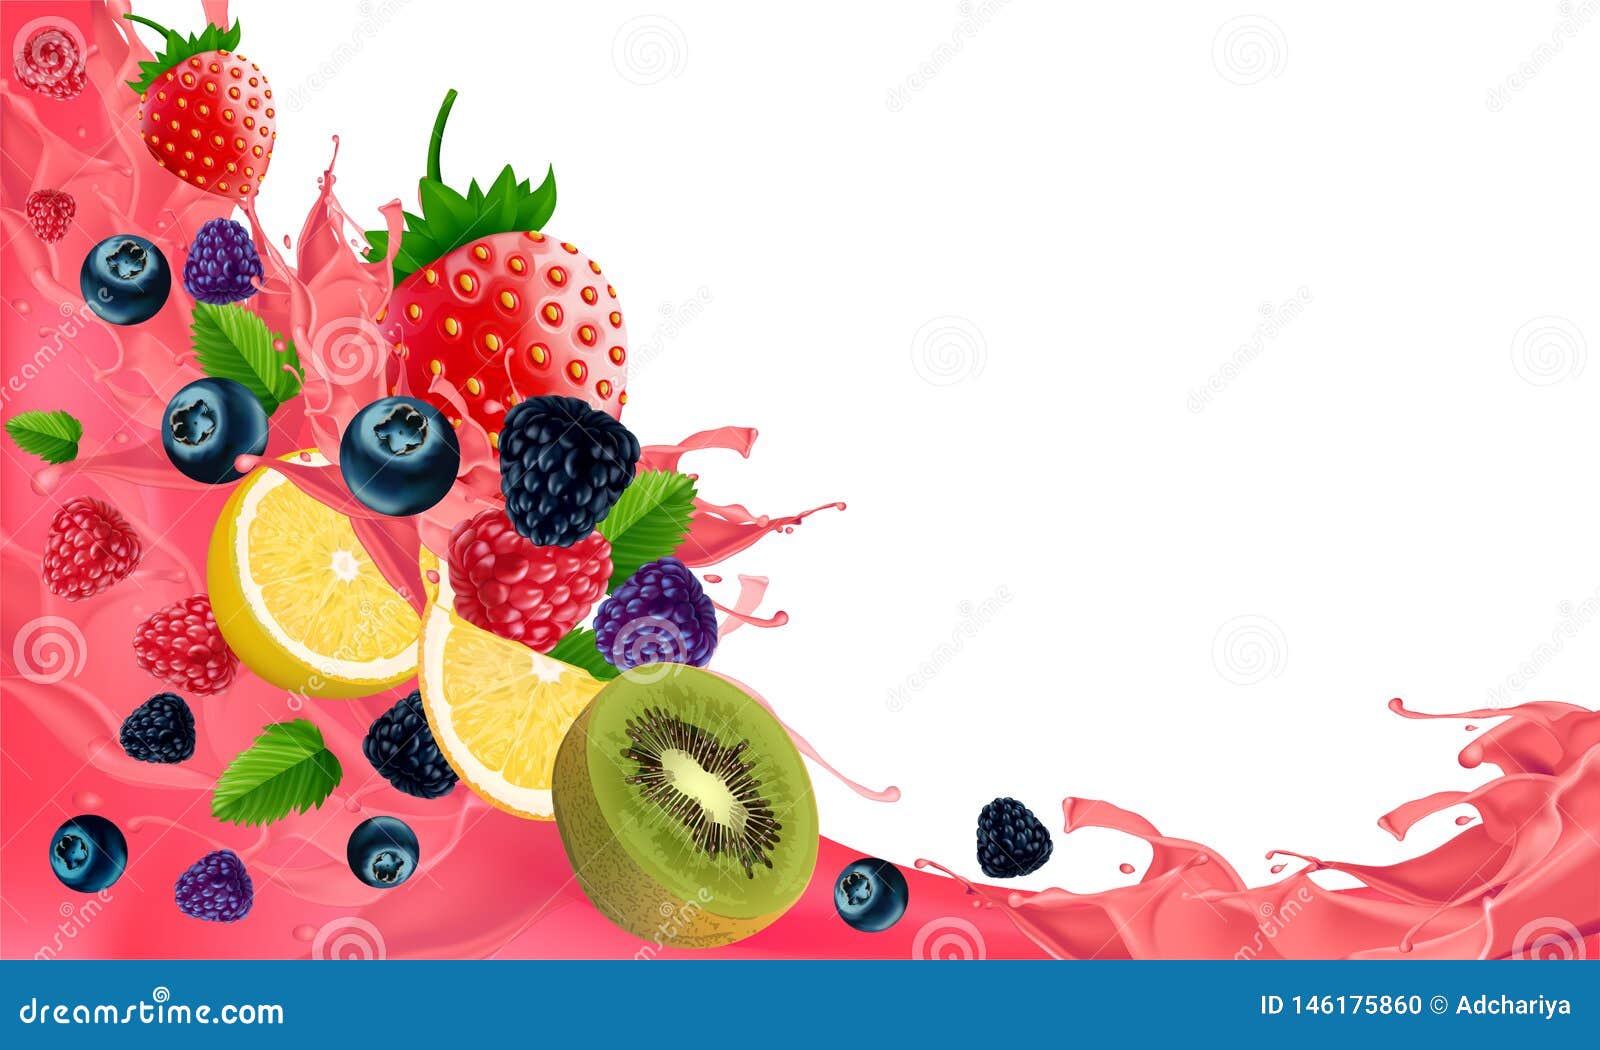 Details 100 mix fruit background